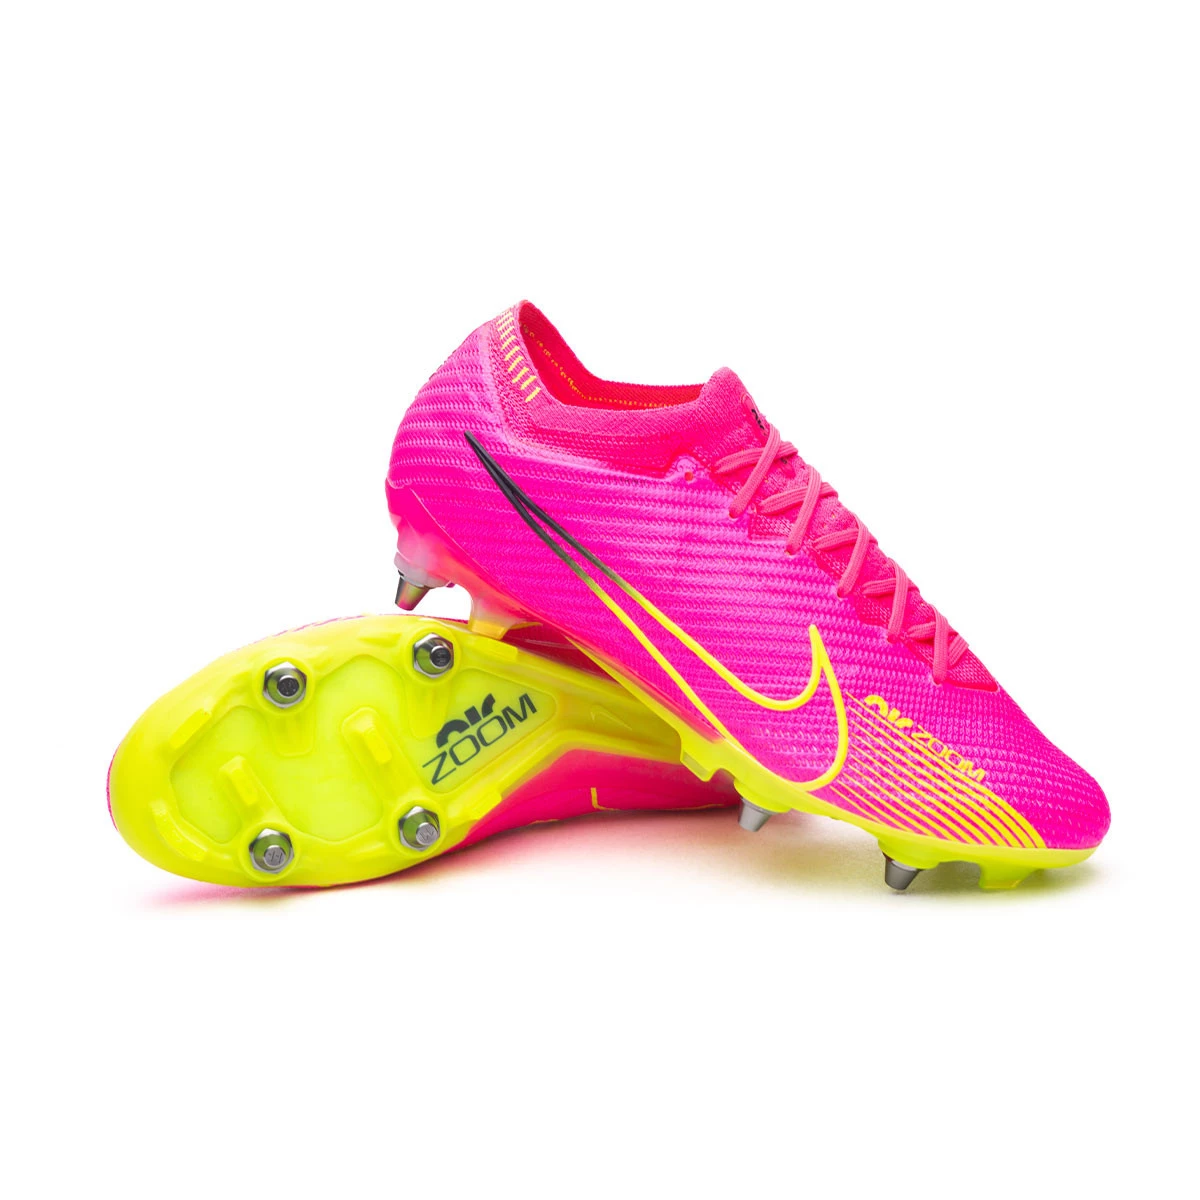 Nike Botas de fútbol Zoom Vapor para Hombre, Pink Blast Volt